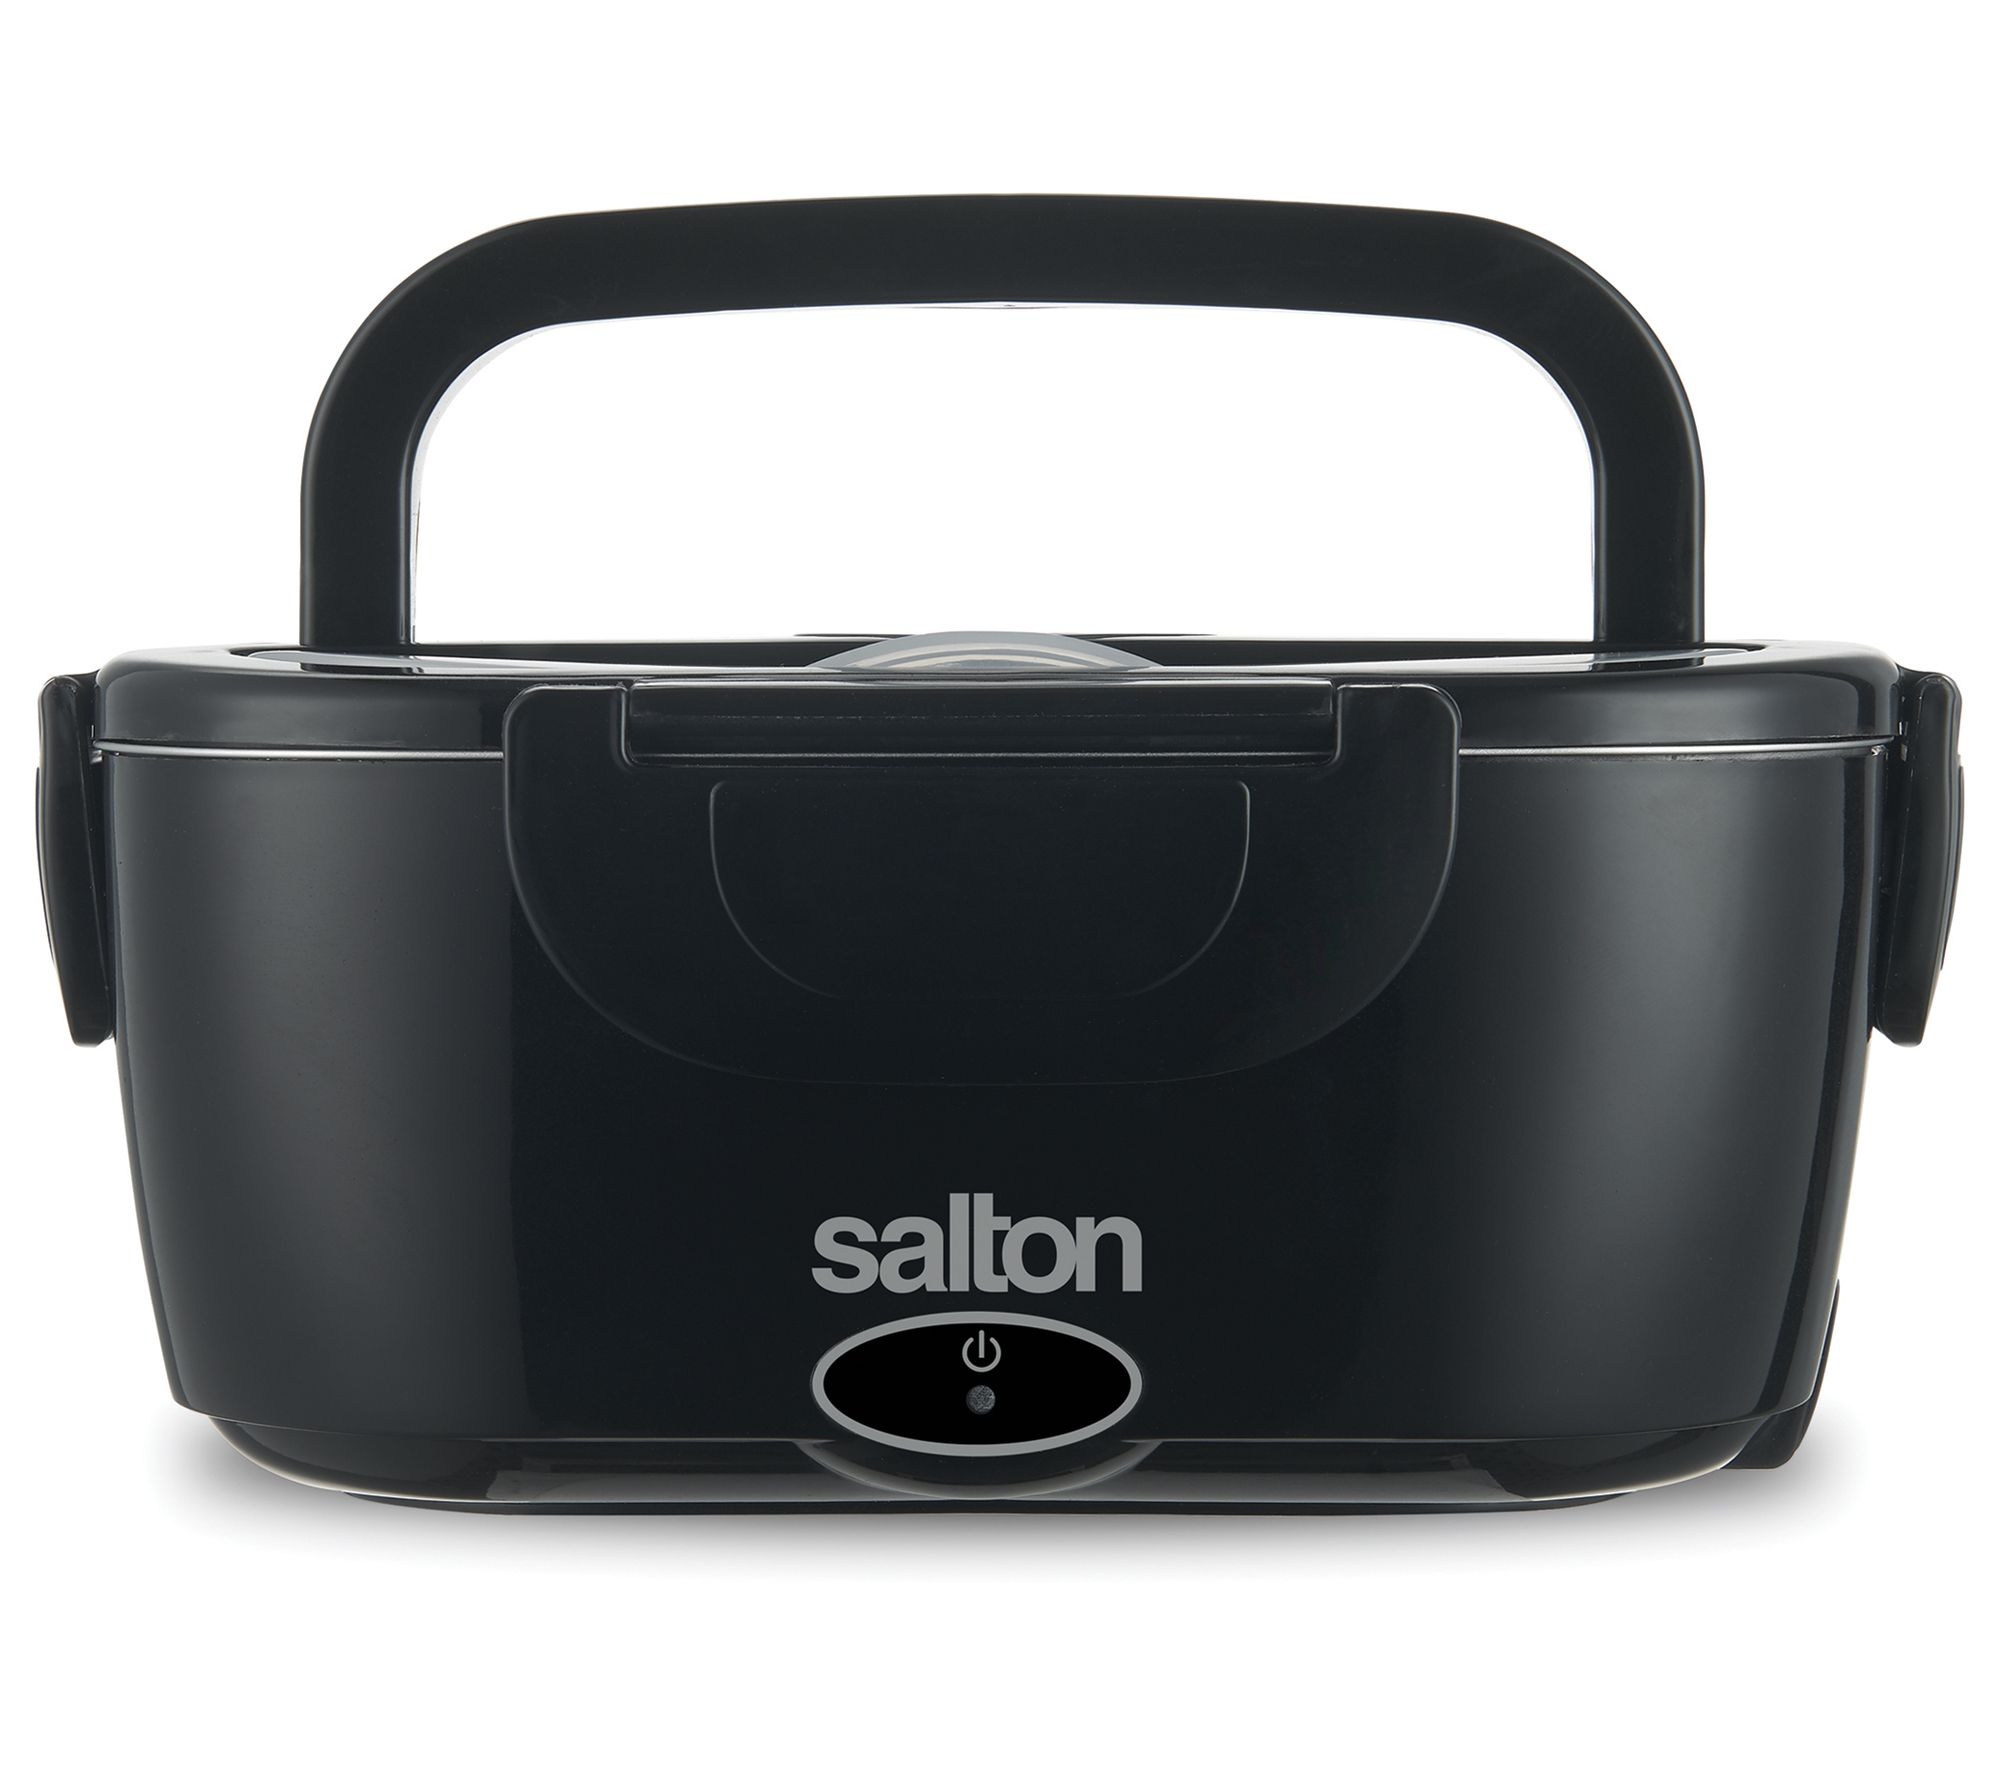 Salton Portable Electric Lunchbox : Target